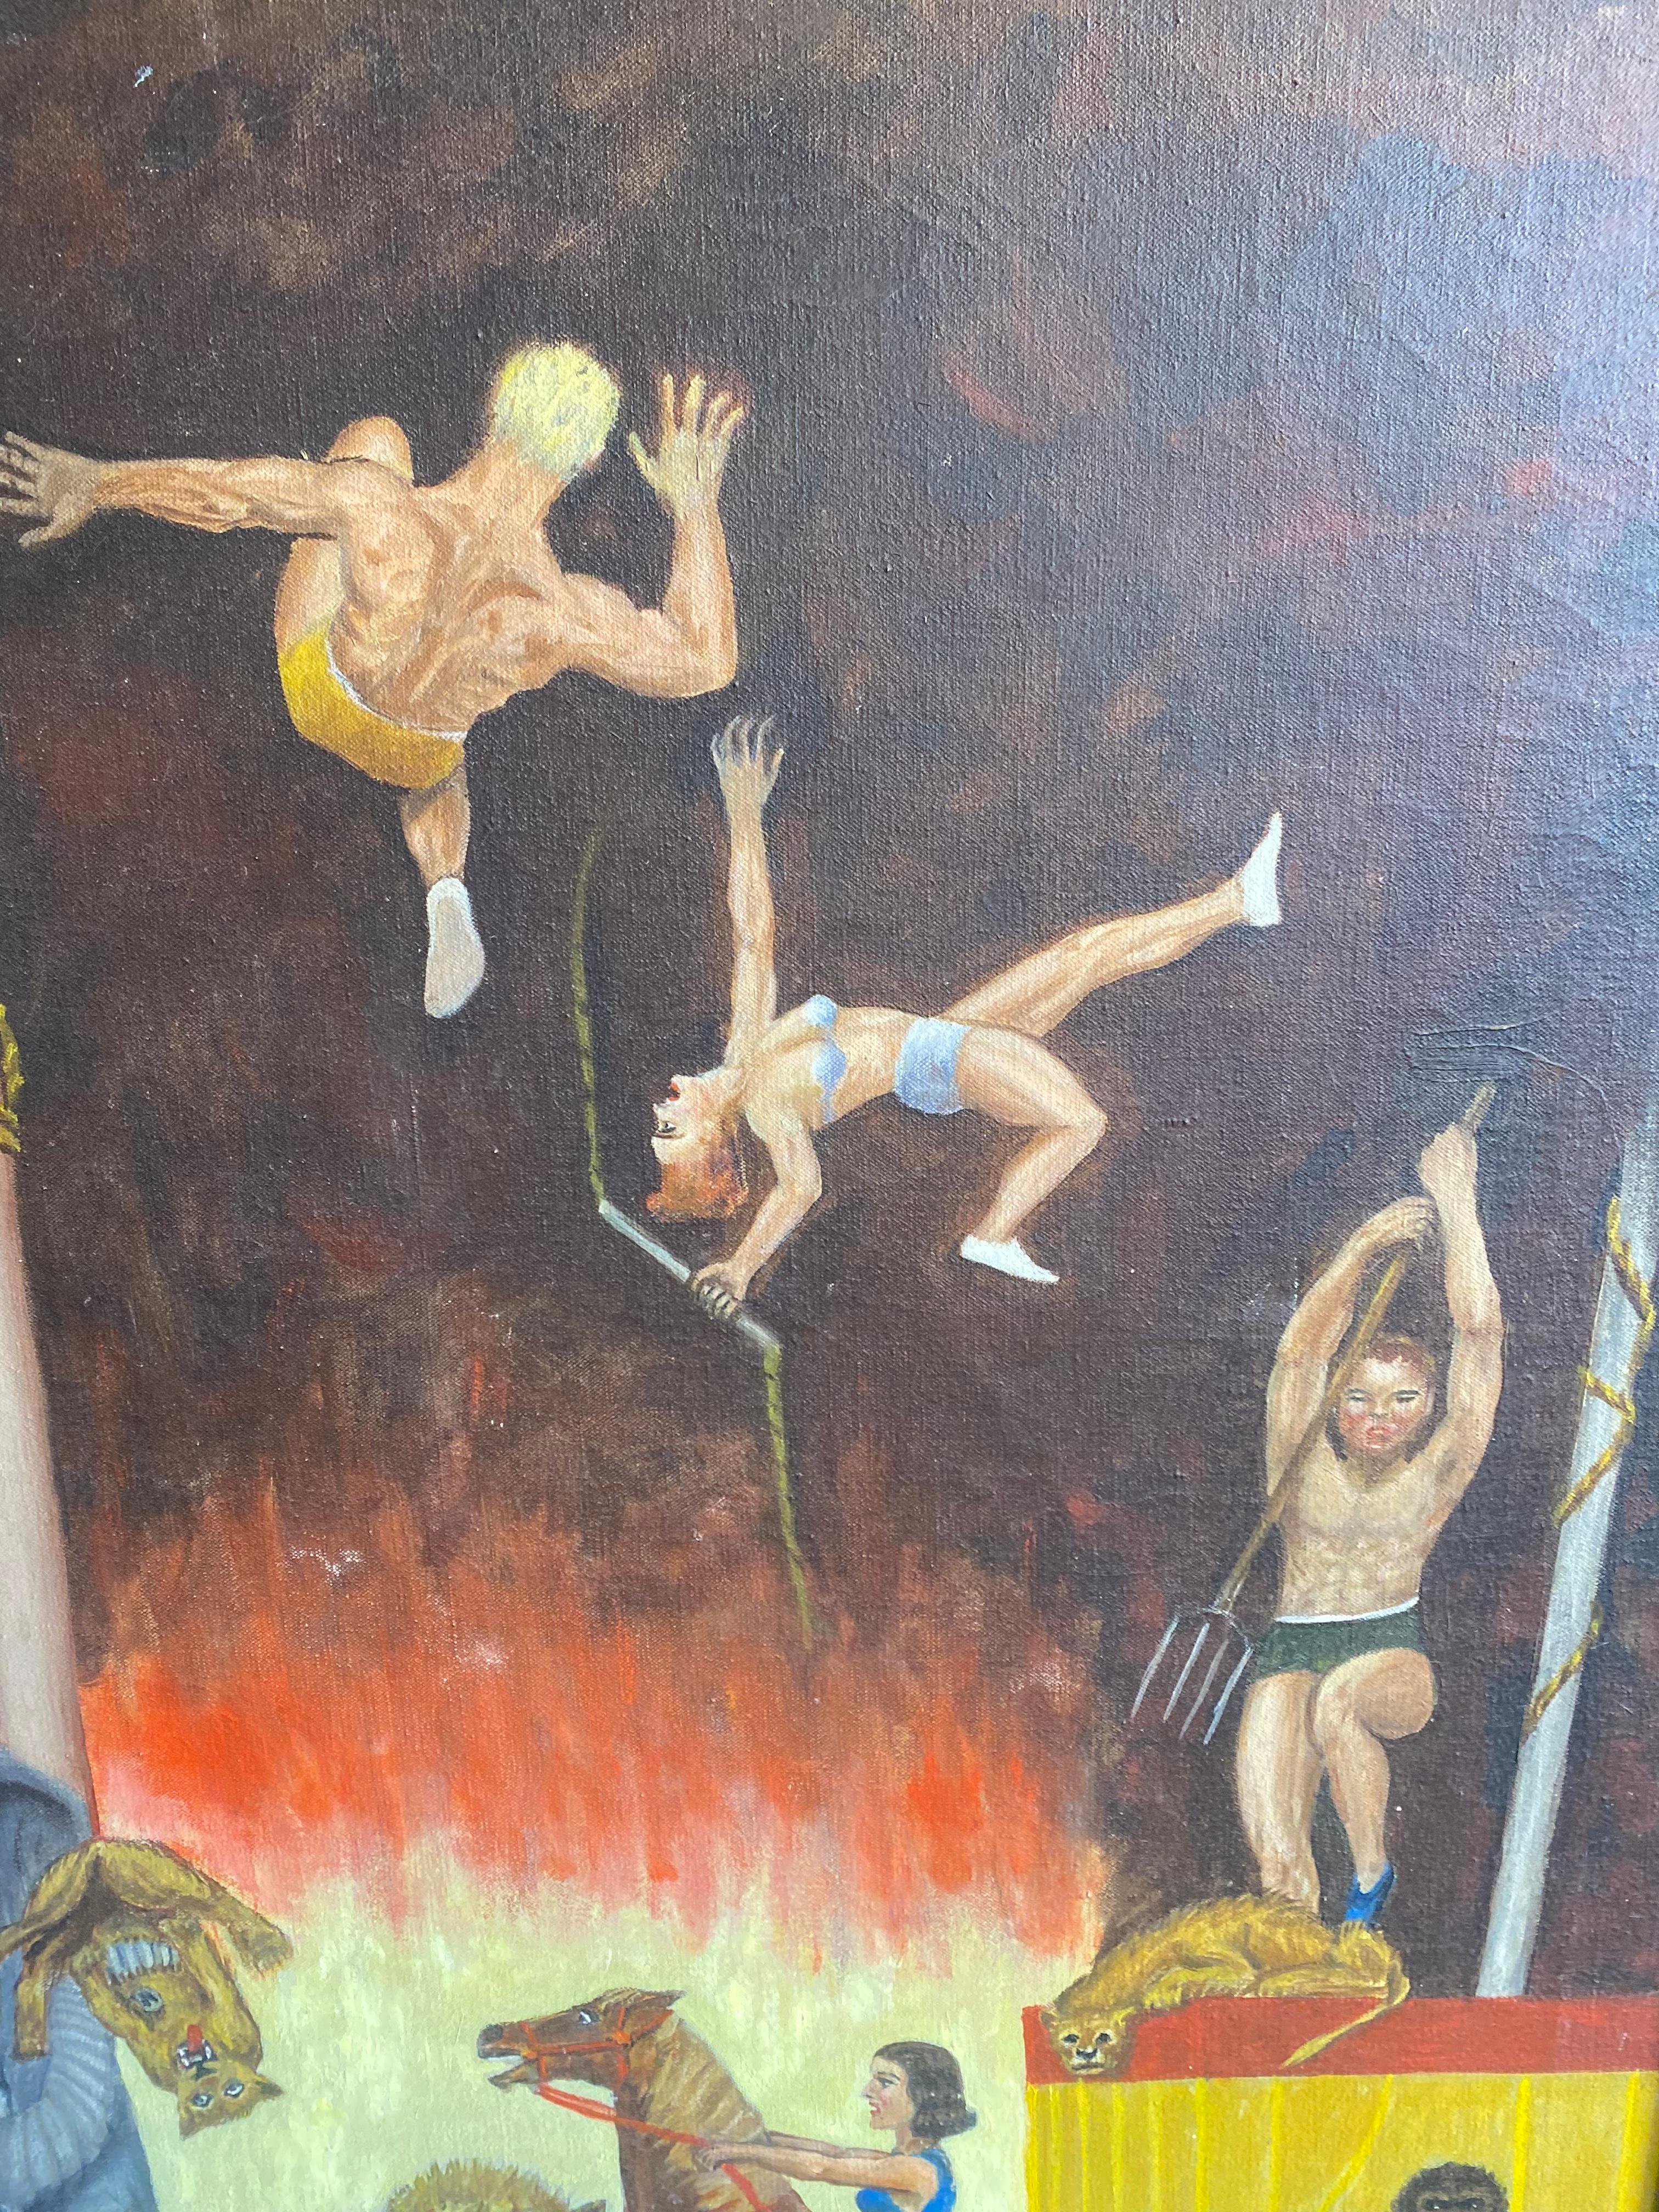 American Large Folk art /surrealist Oil painting on canvas.. Circus scene. 